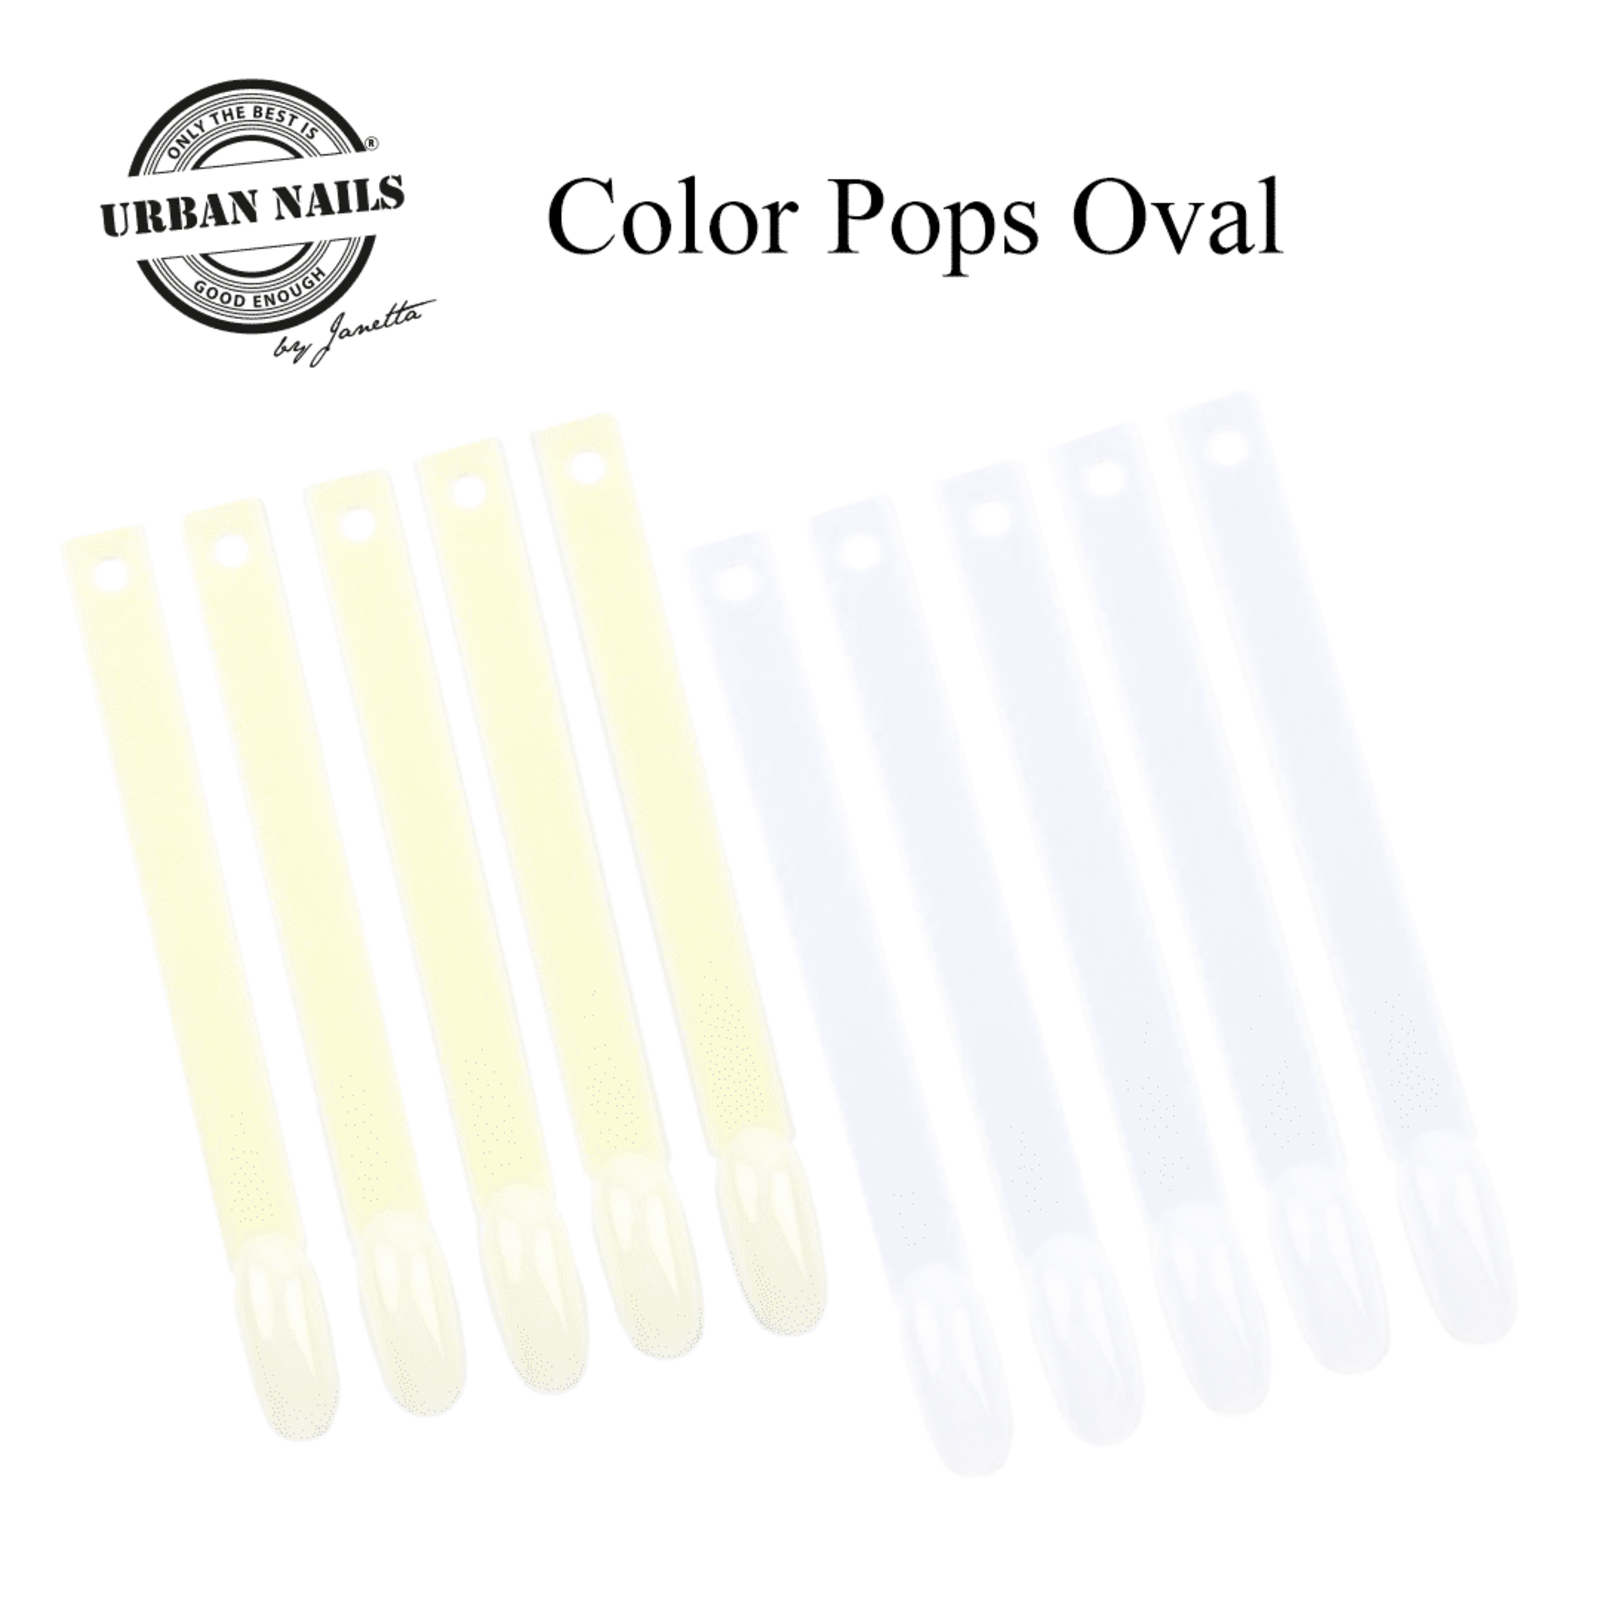 Color Pops Oval (clear) 50 stuks + ring